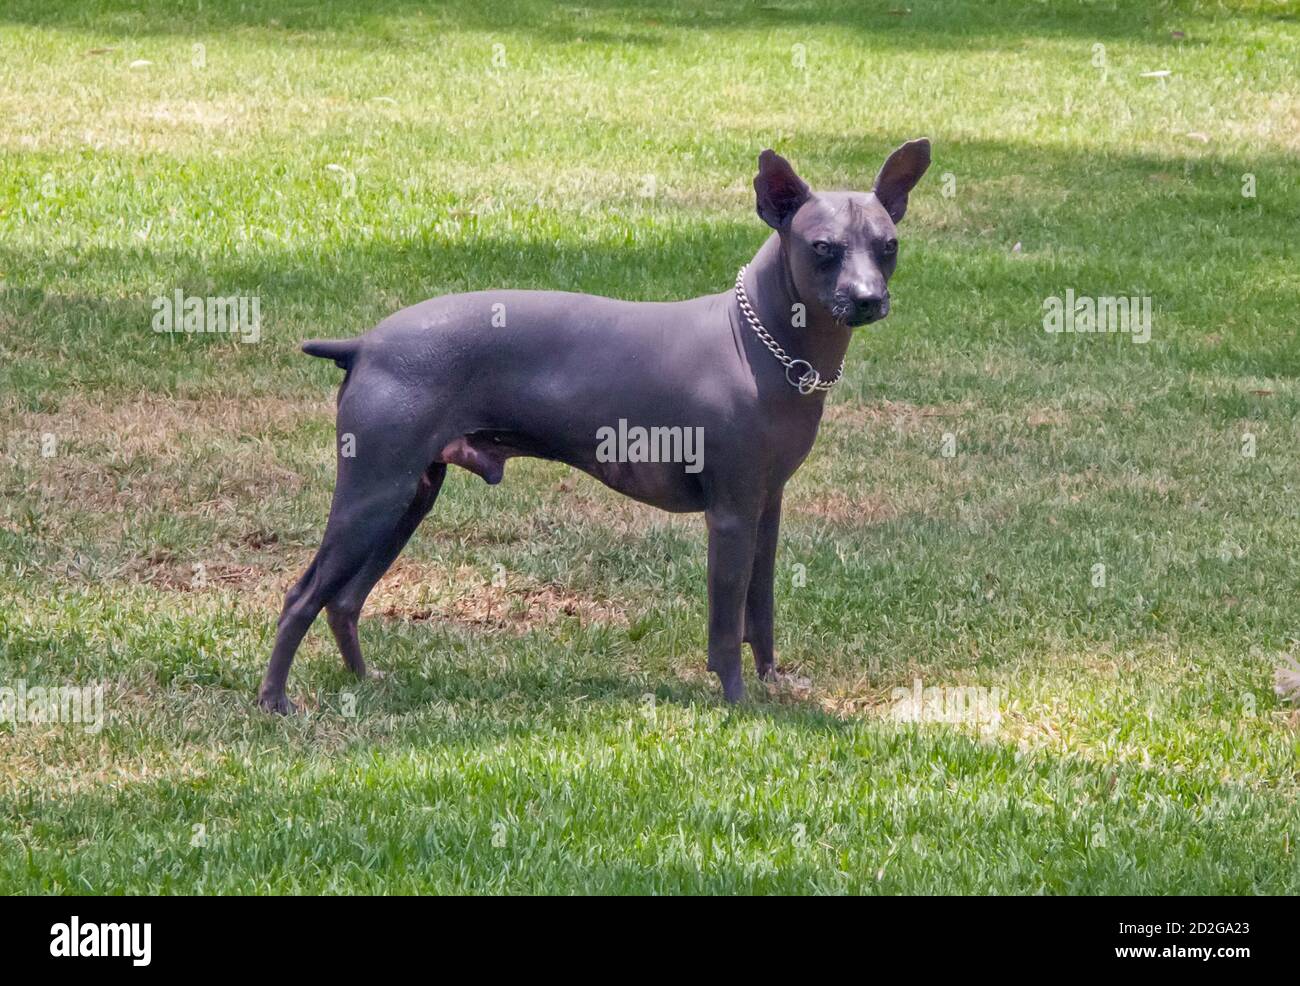 Xoloitzcuintle dog hi-res stock photography and images - Alamy